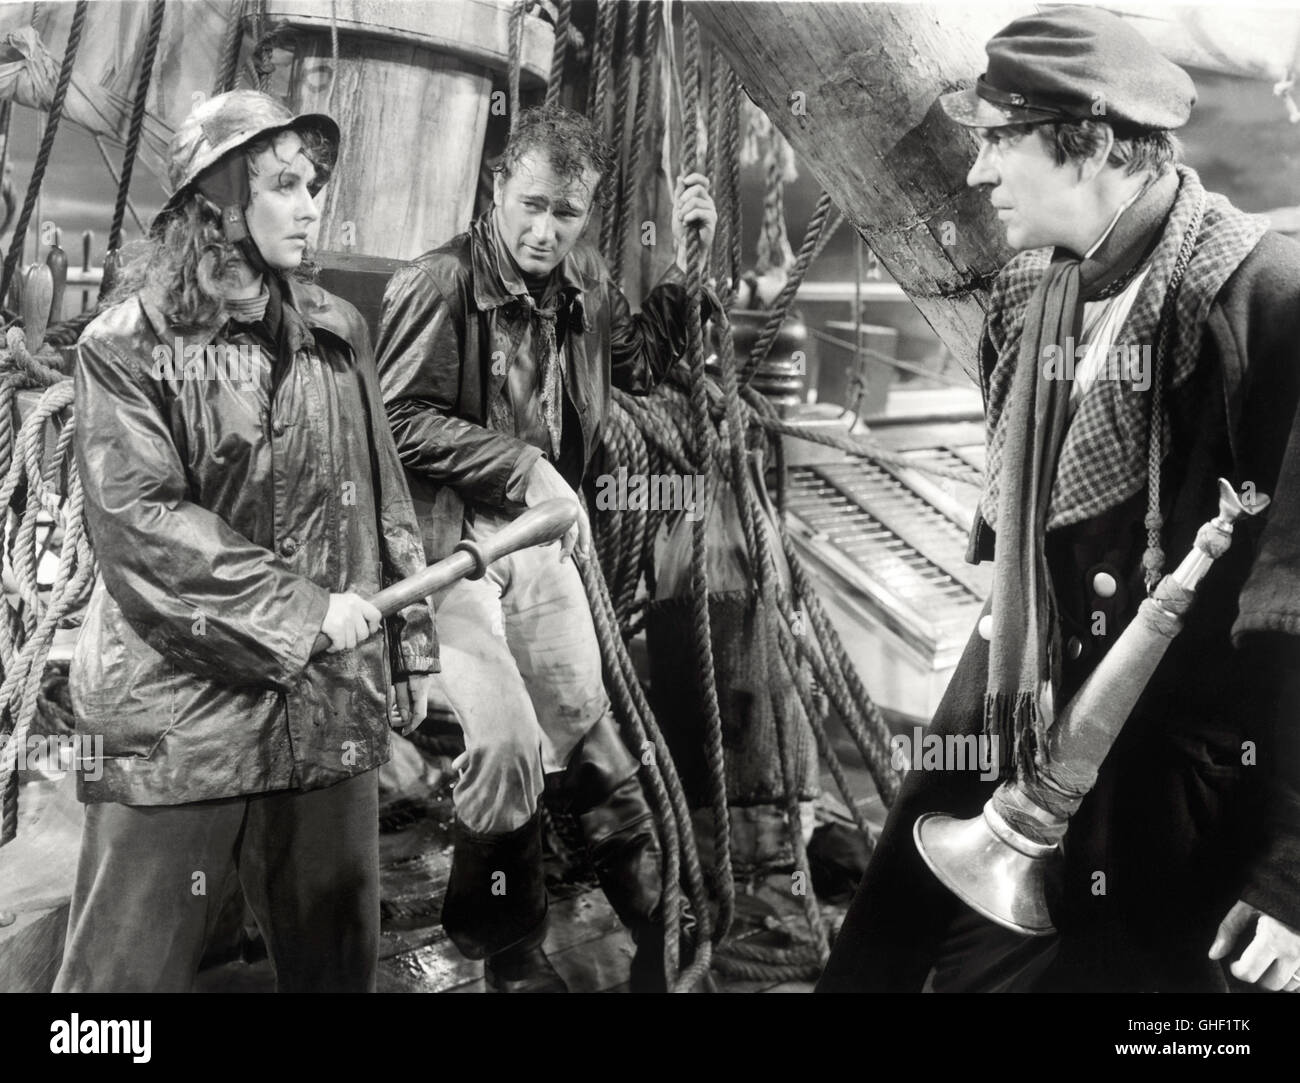 Piraten im Karibischen Meer REAP THE WILD WIND USA 1942 Cecil B. DeMille PAULETTE GODDARD (Loxi Claiborne), JOHN WAYNE (Captain Jack Stuart), VICTOR KILIAN (First Mate, Widgeon) Regie: Cecil B. DeMille Stock Photo